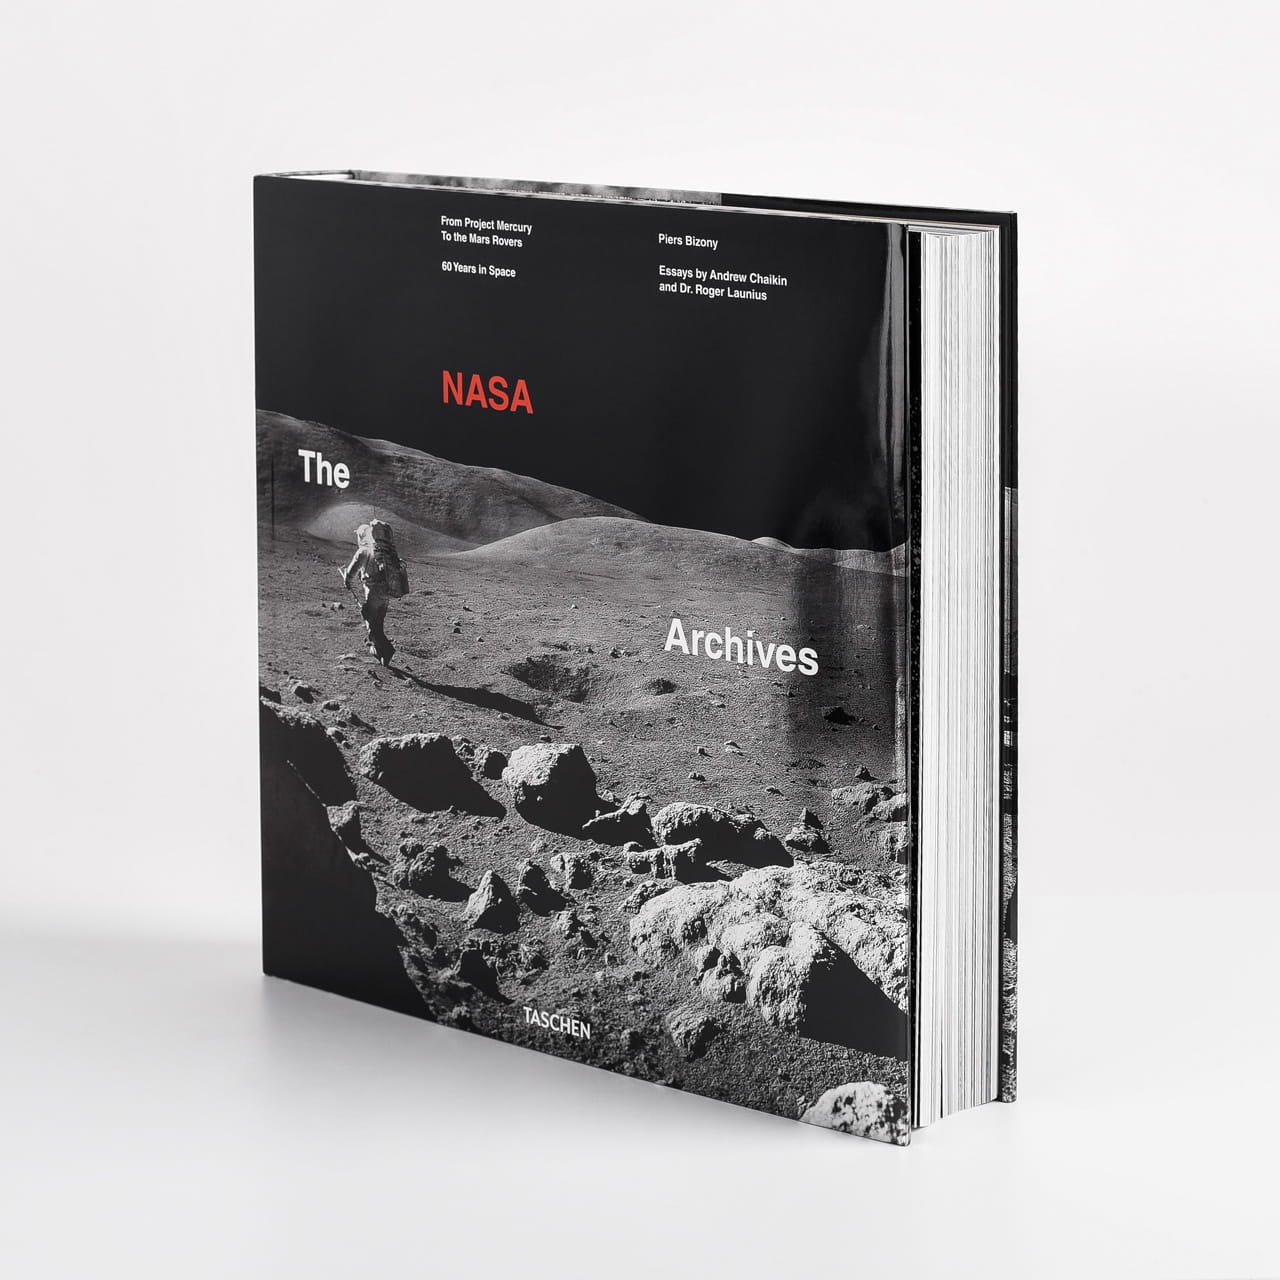 The NASA Archives - 60 Years in Space KSIĄŻKA O KOSMOSIE na prezent